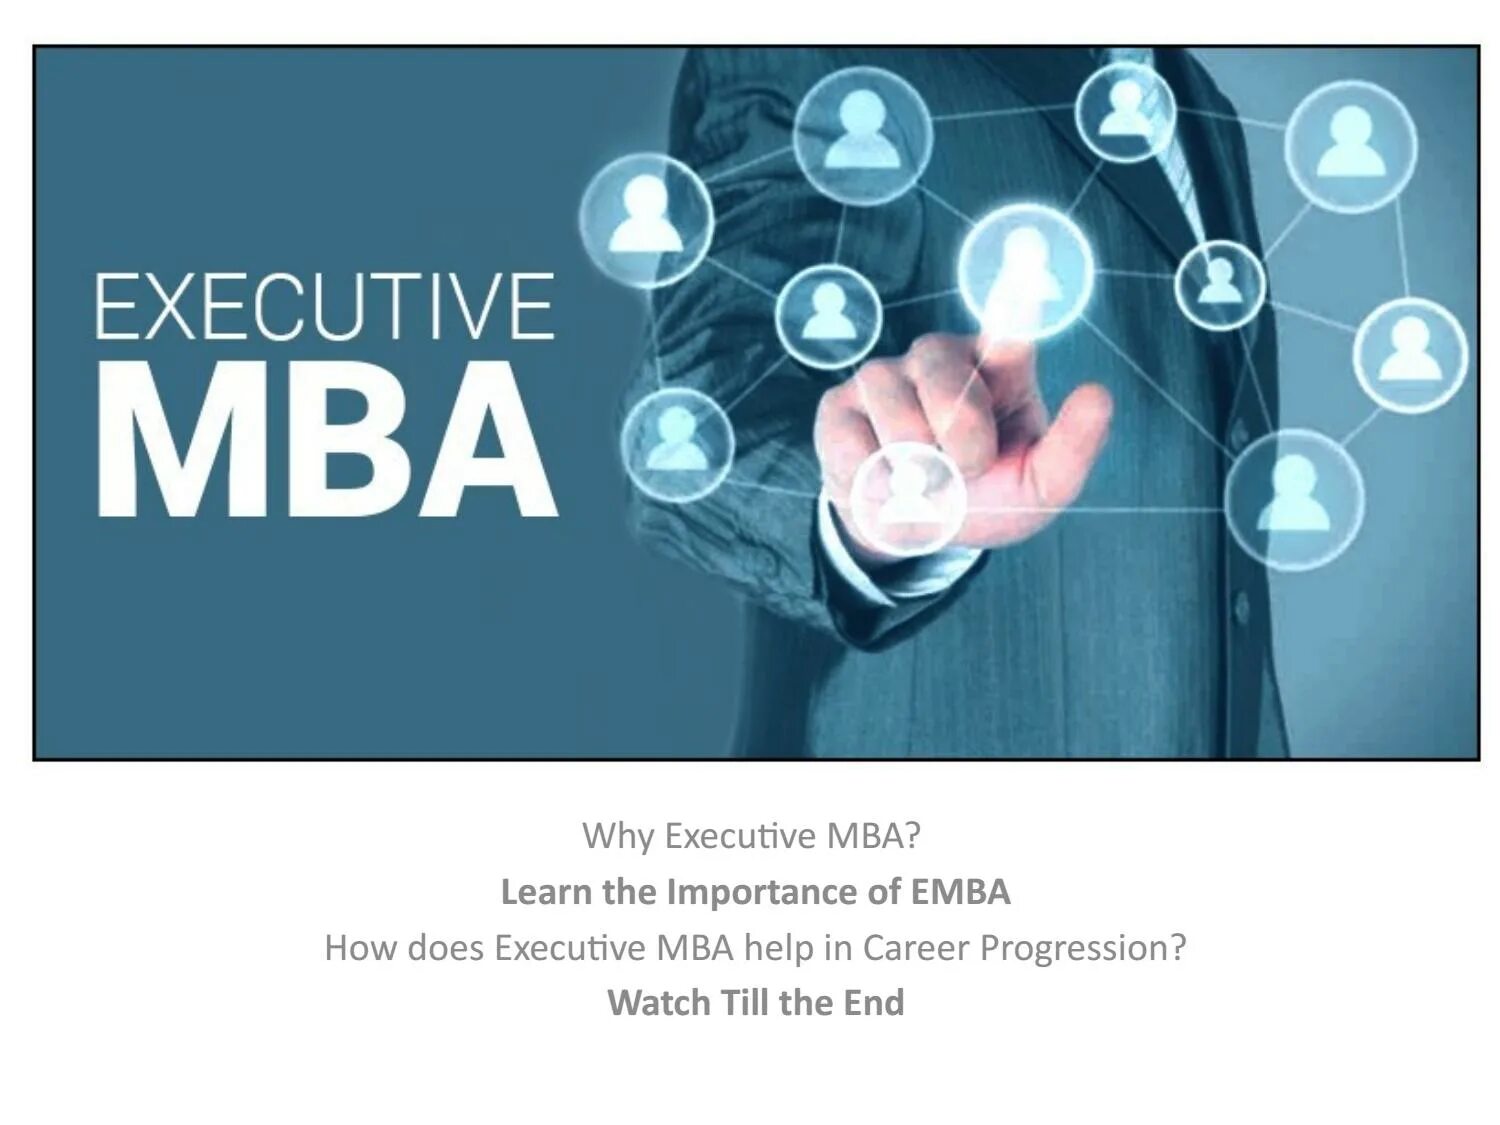 EMBA. Курсы MBA. Executive MBA. MBA В картинках. Мба россии